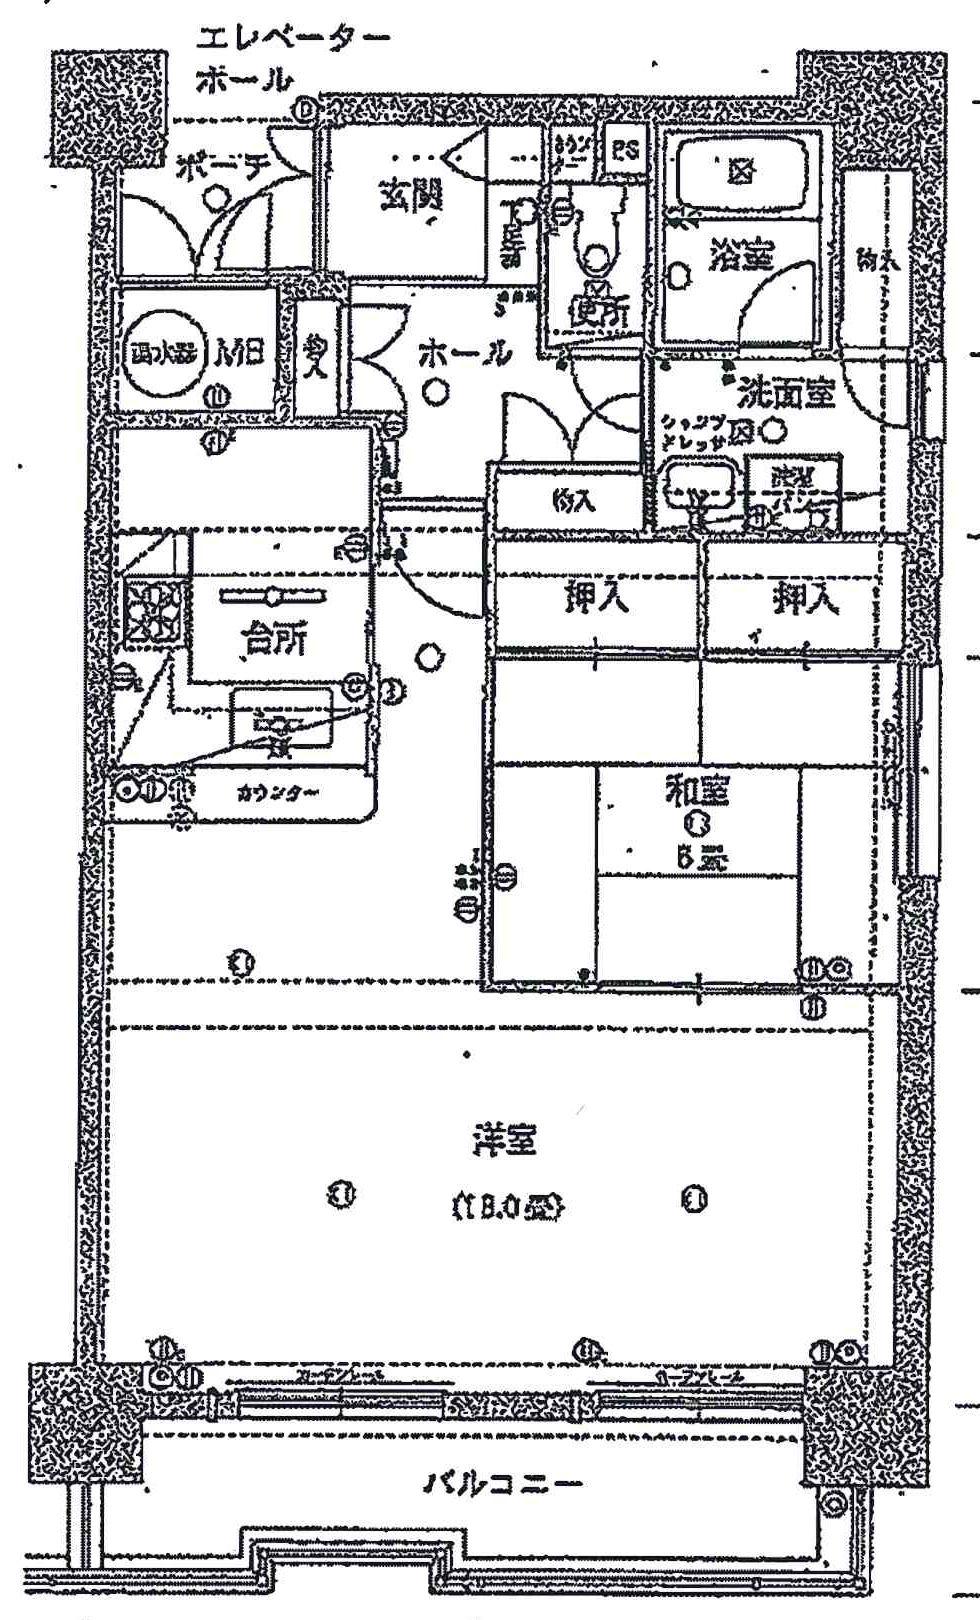 Floor plan. 1LDK, Price 13.5 million yen, Occupied area 69.76 sq m , Balcony area 8.8 sq m